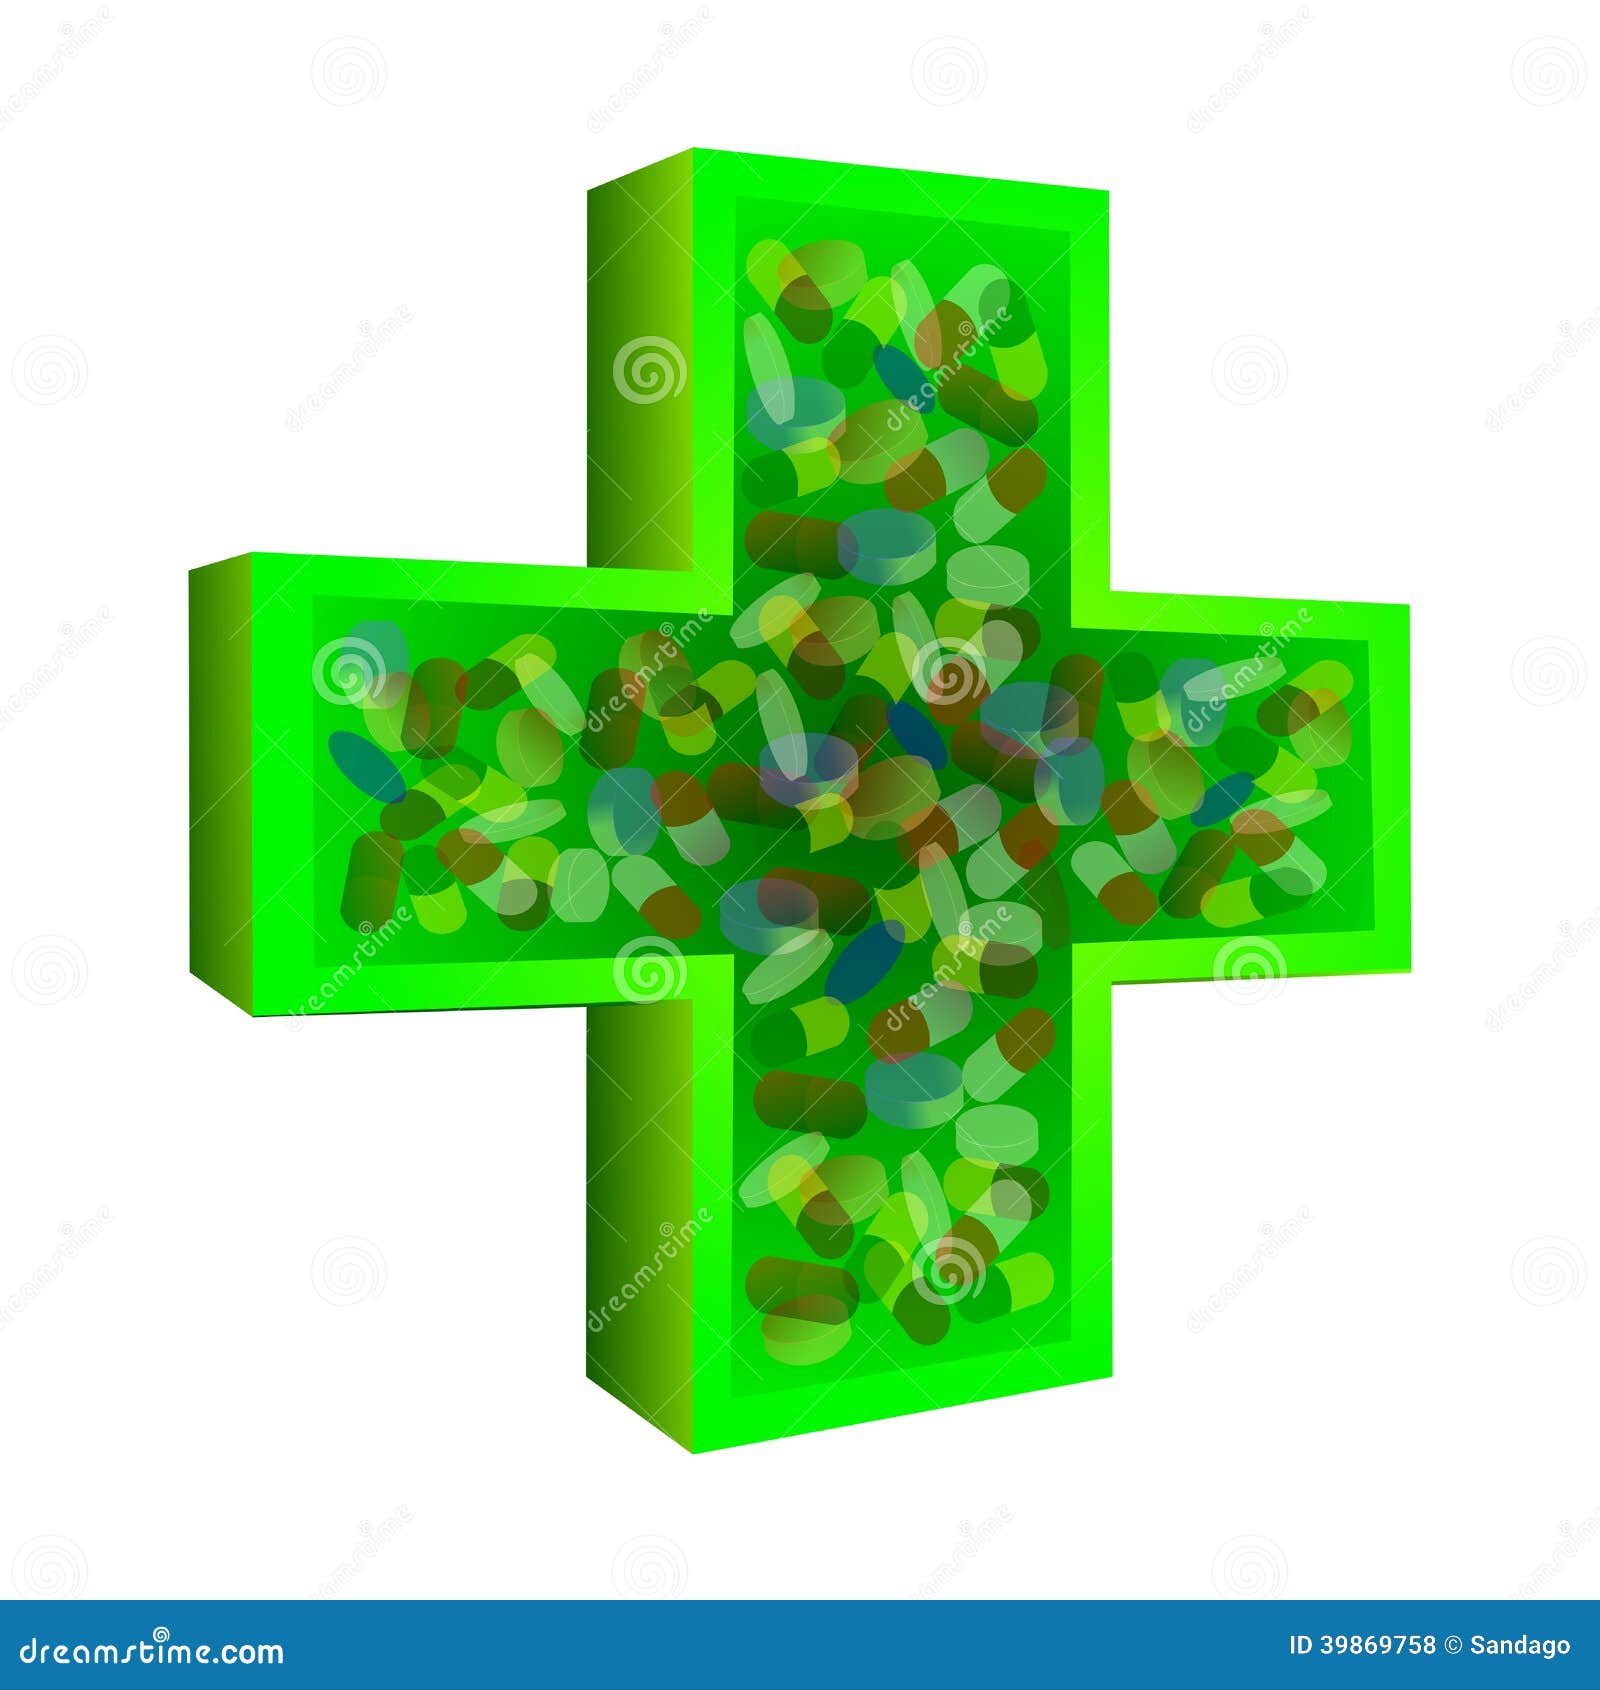 medical cross